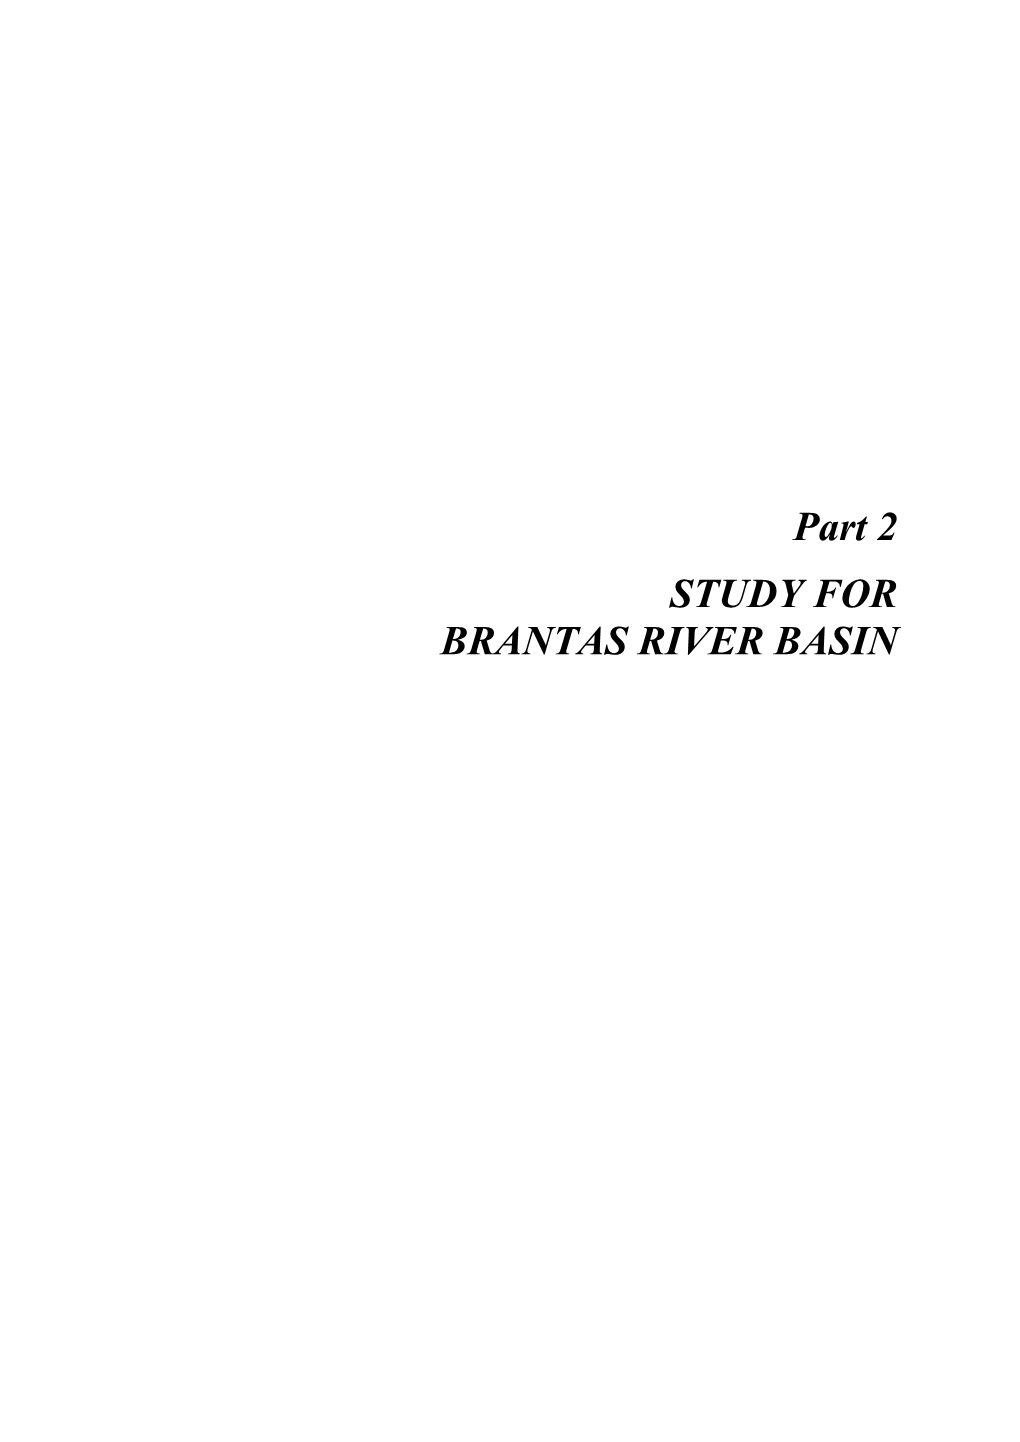 Part 2 STUDY for BRANTAS RIVER BASIN